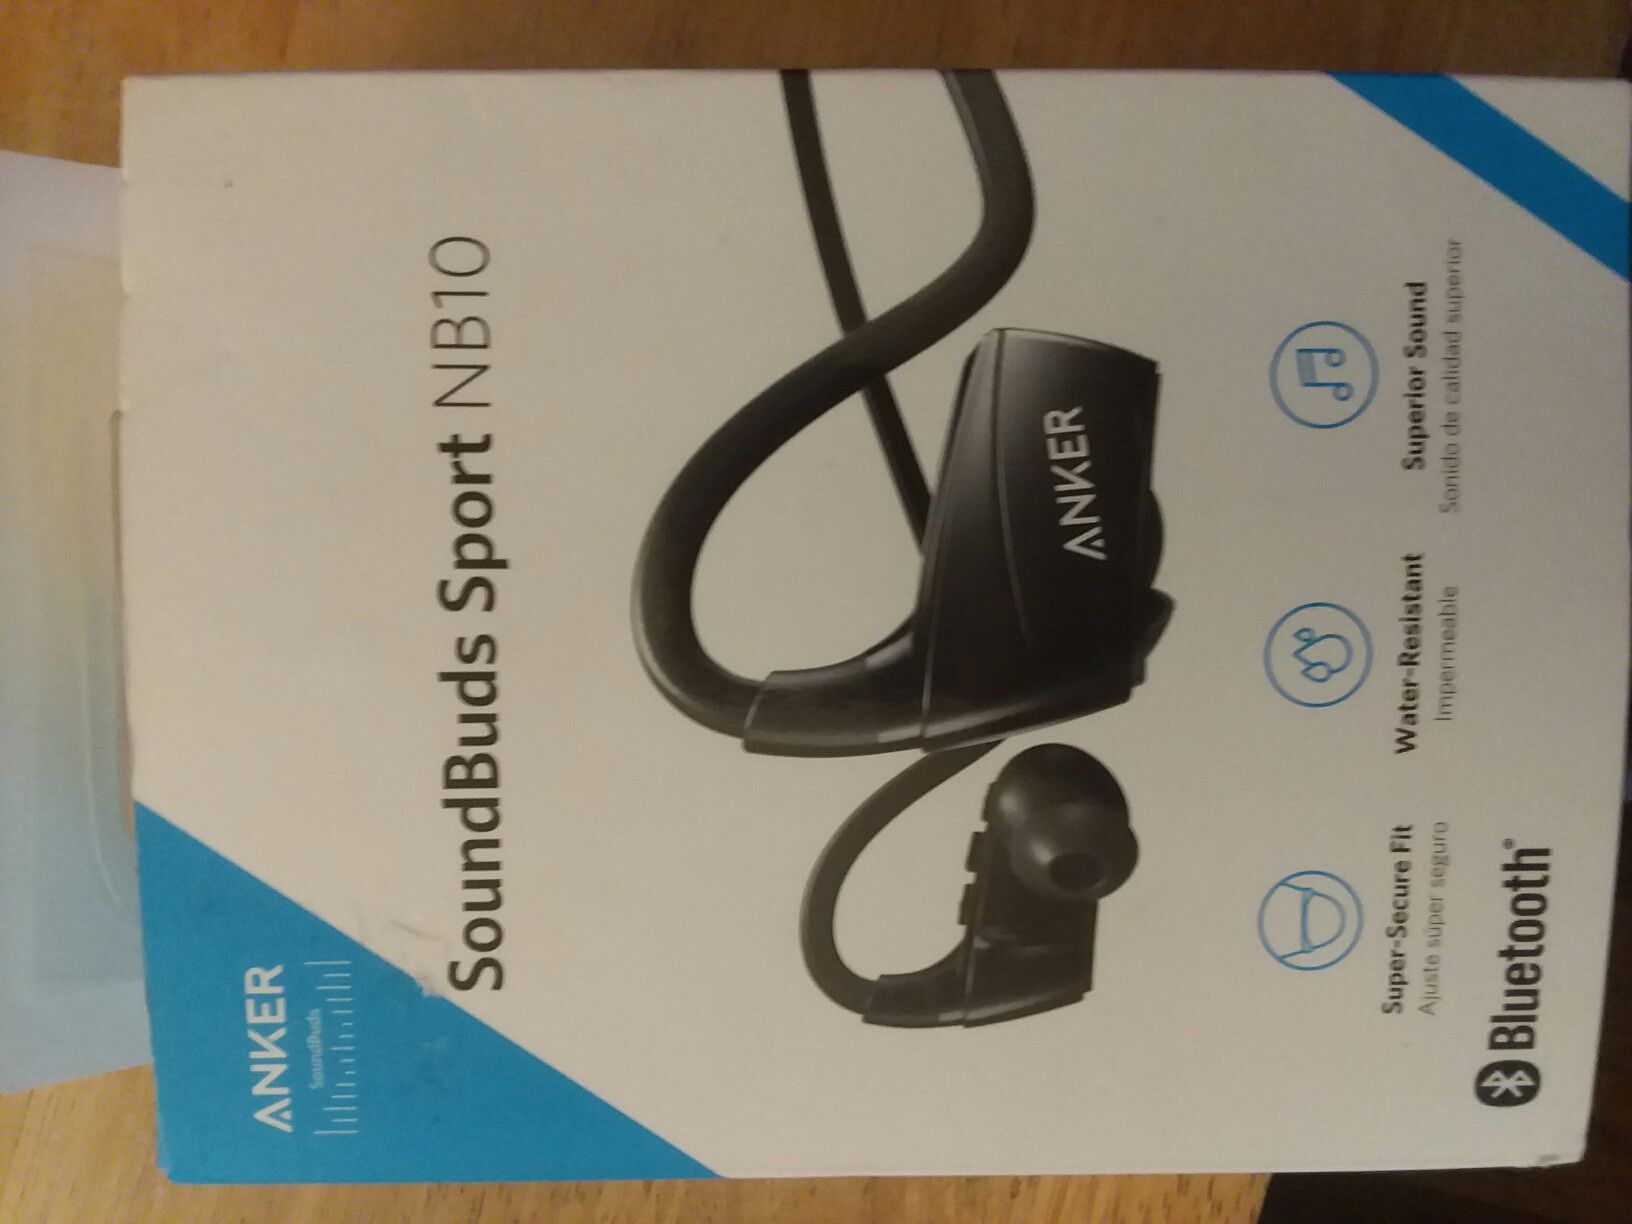 ANKER SoundBuds Sport NB10 Bluetooth Earbuds